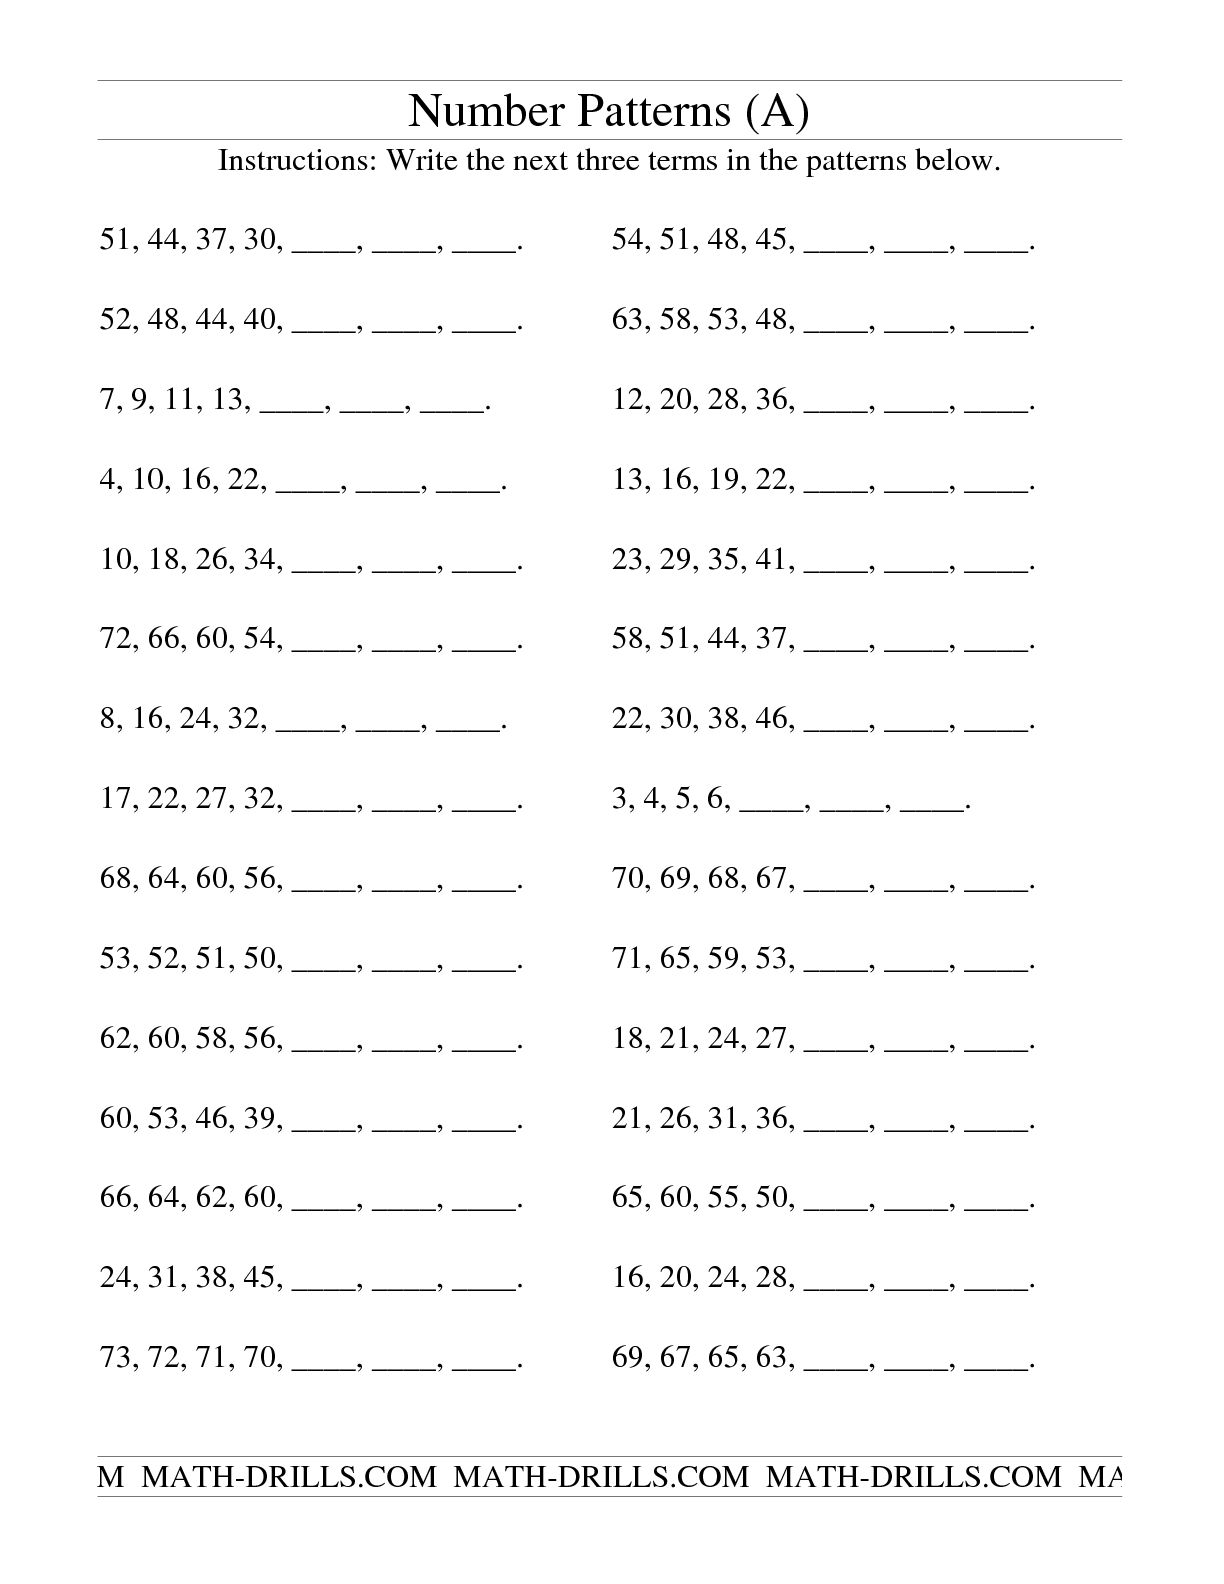 Growing Number Patterns Worksheets Image